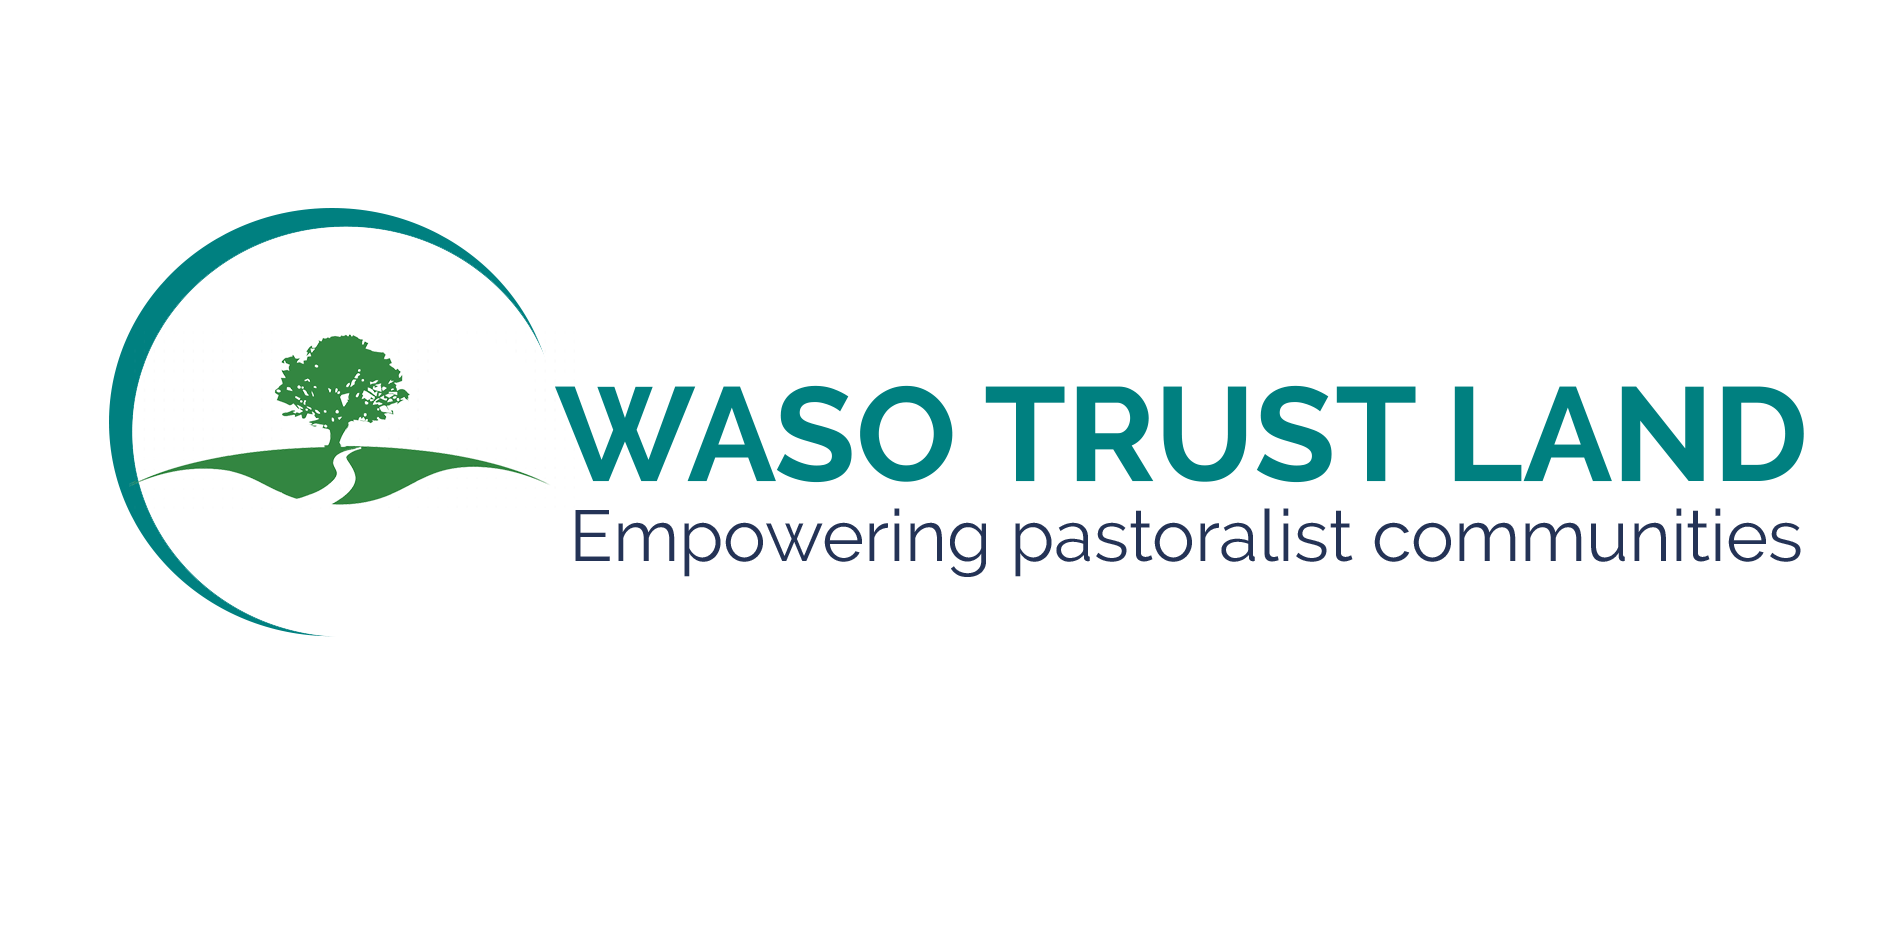 Waso Trust Land